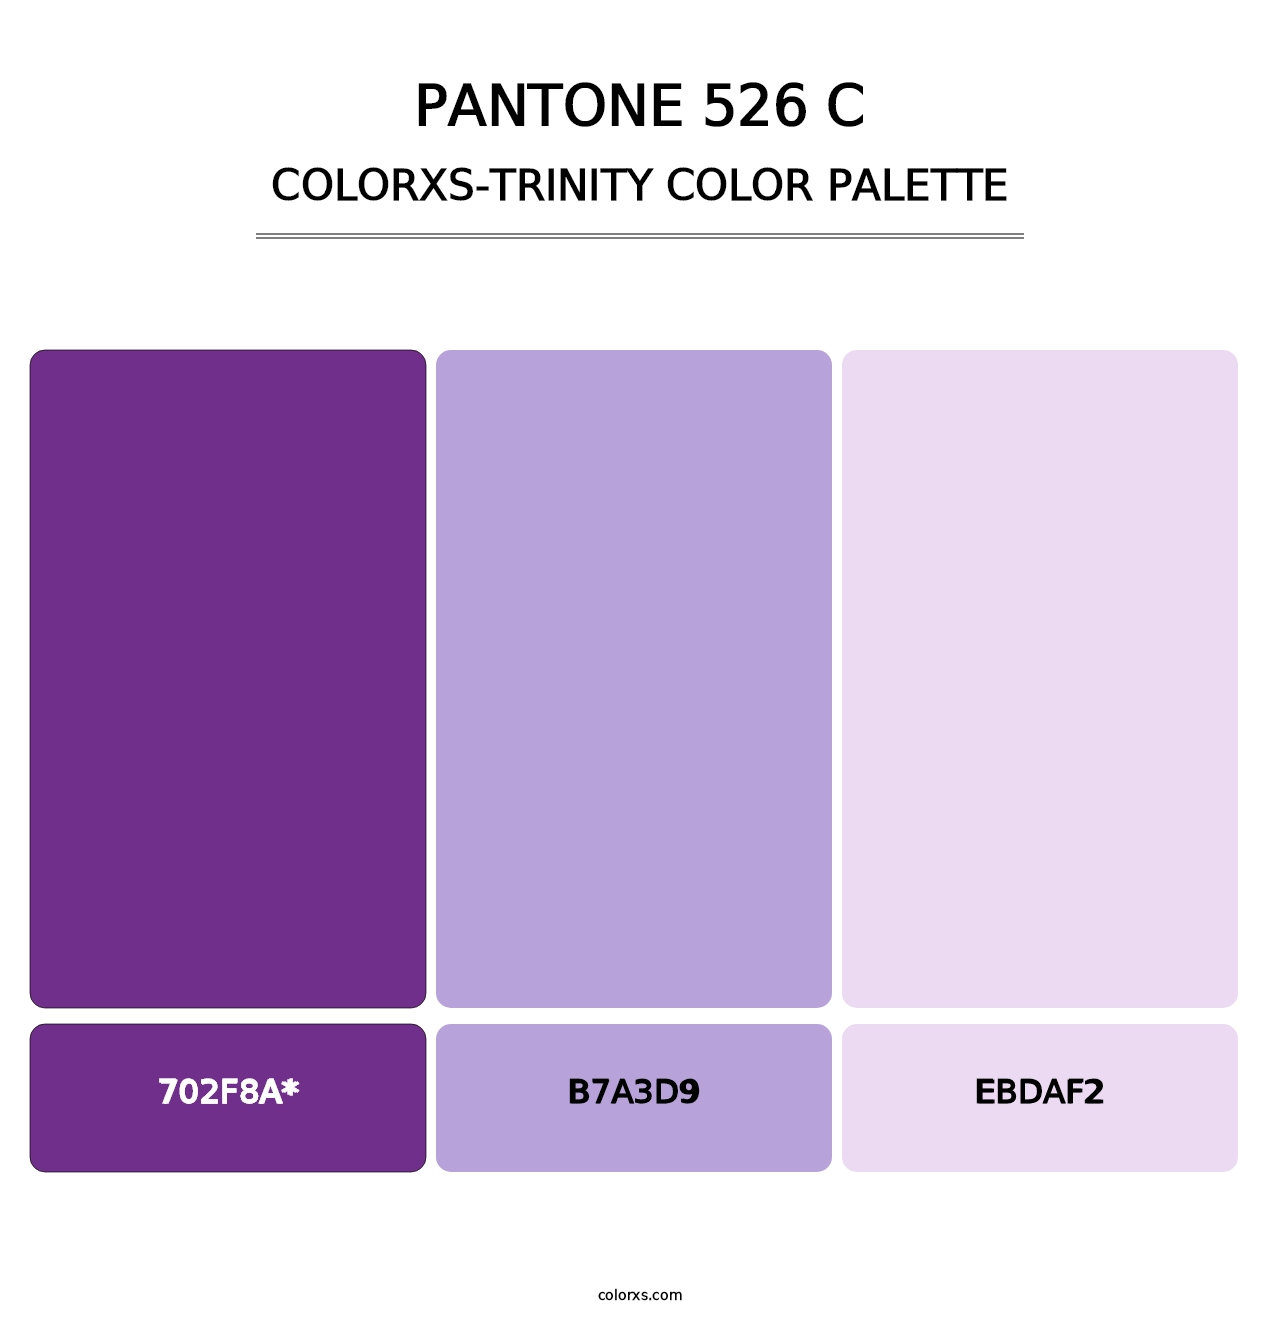 PANTONE 526 C - Colorxs Trinity Palette